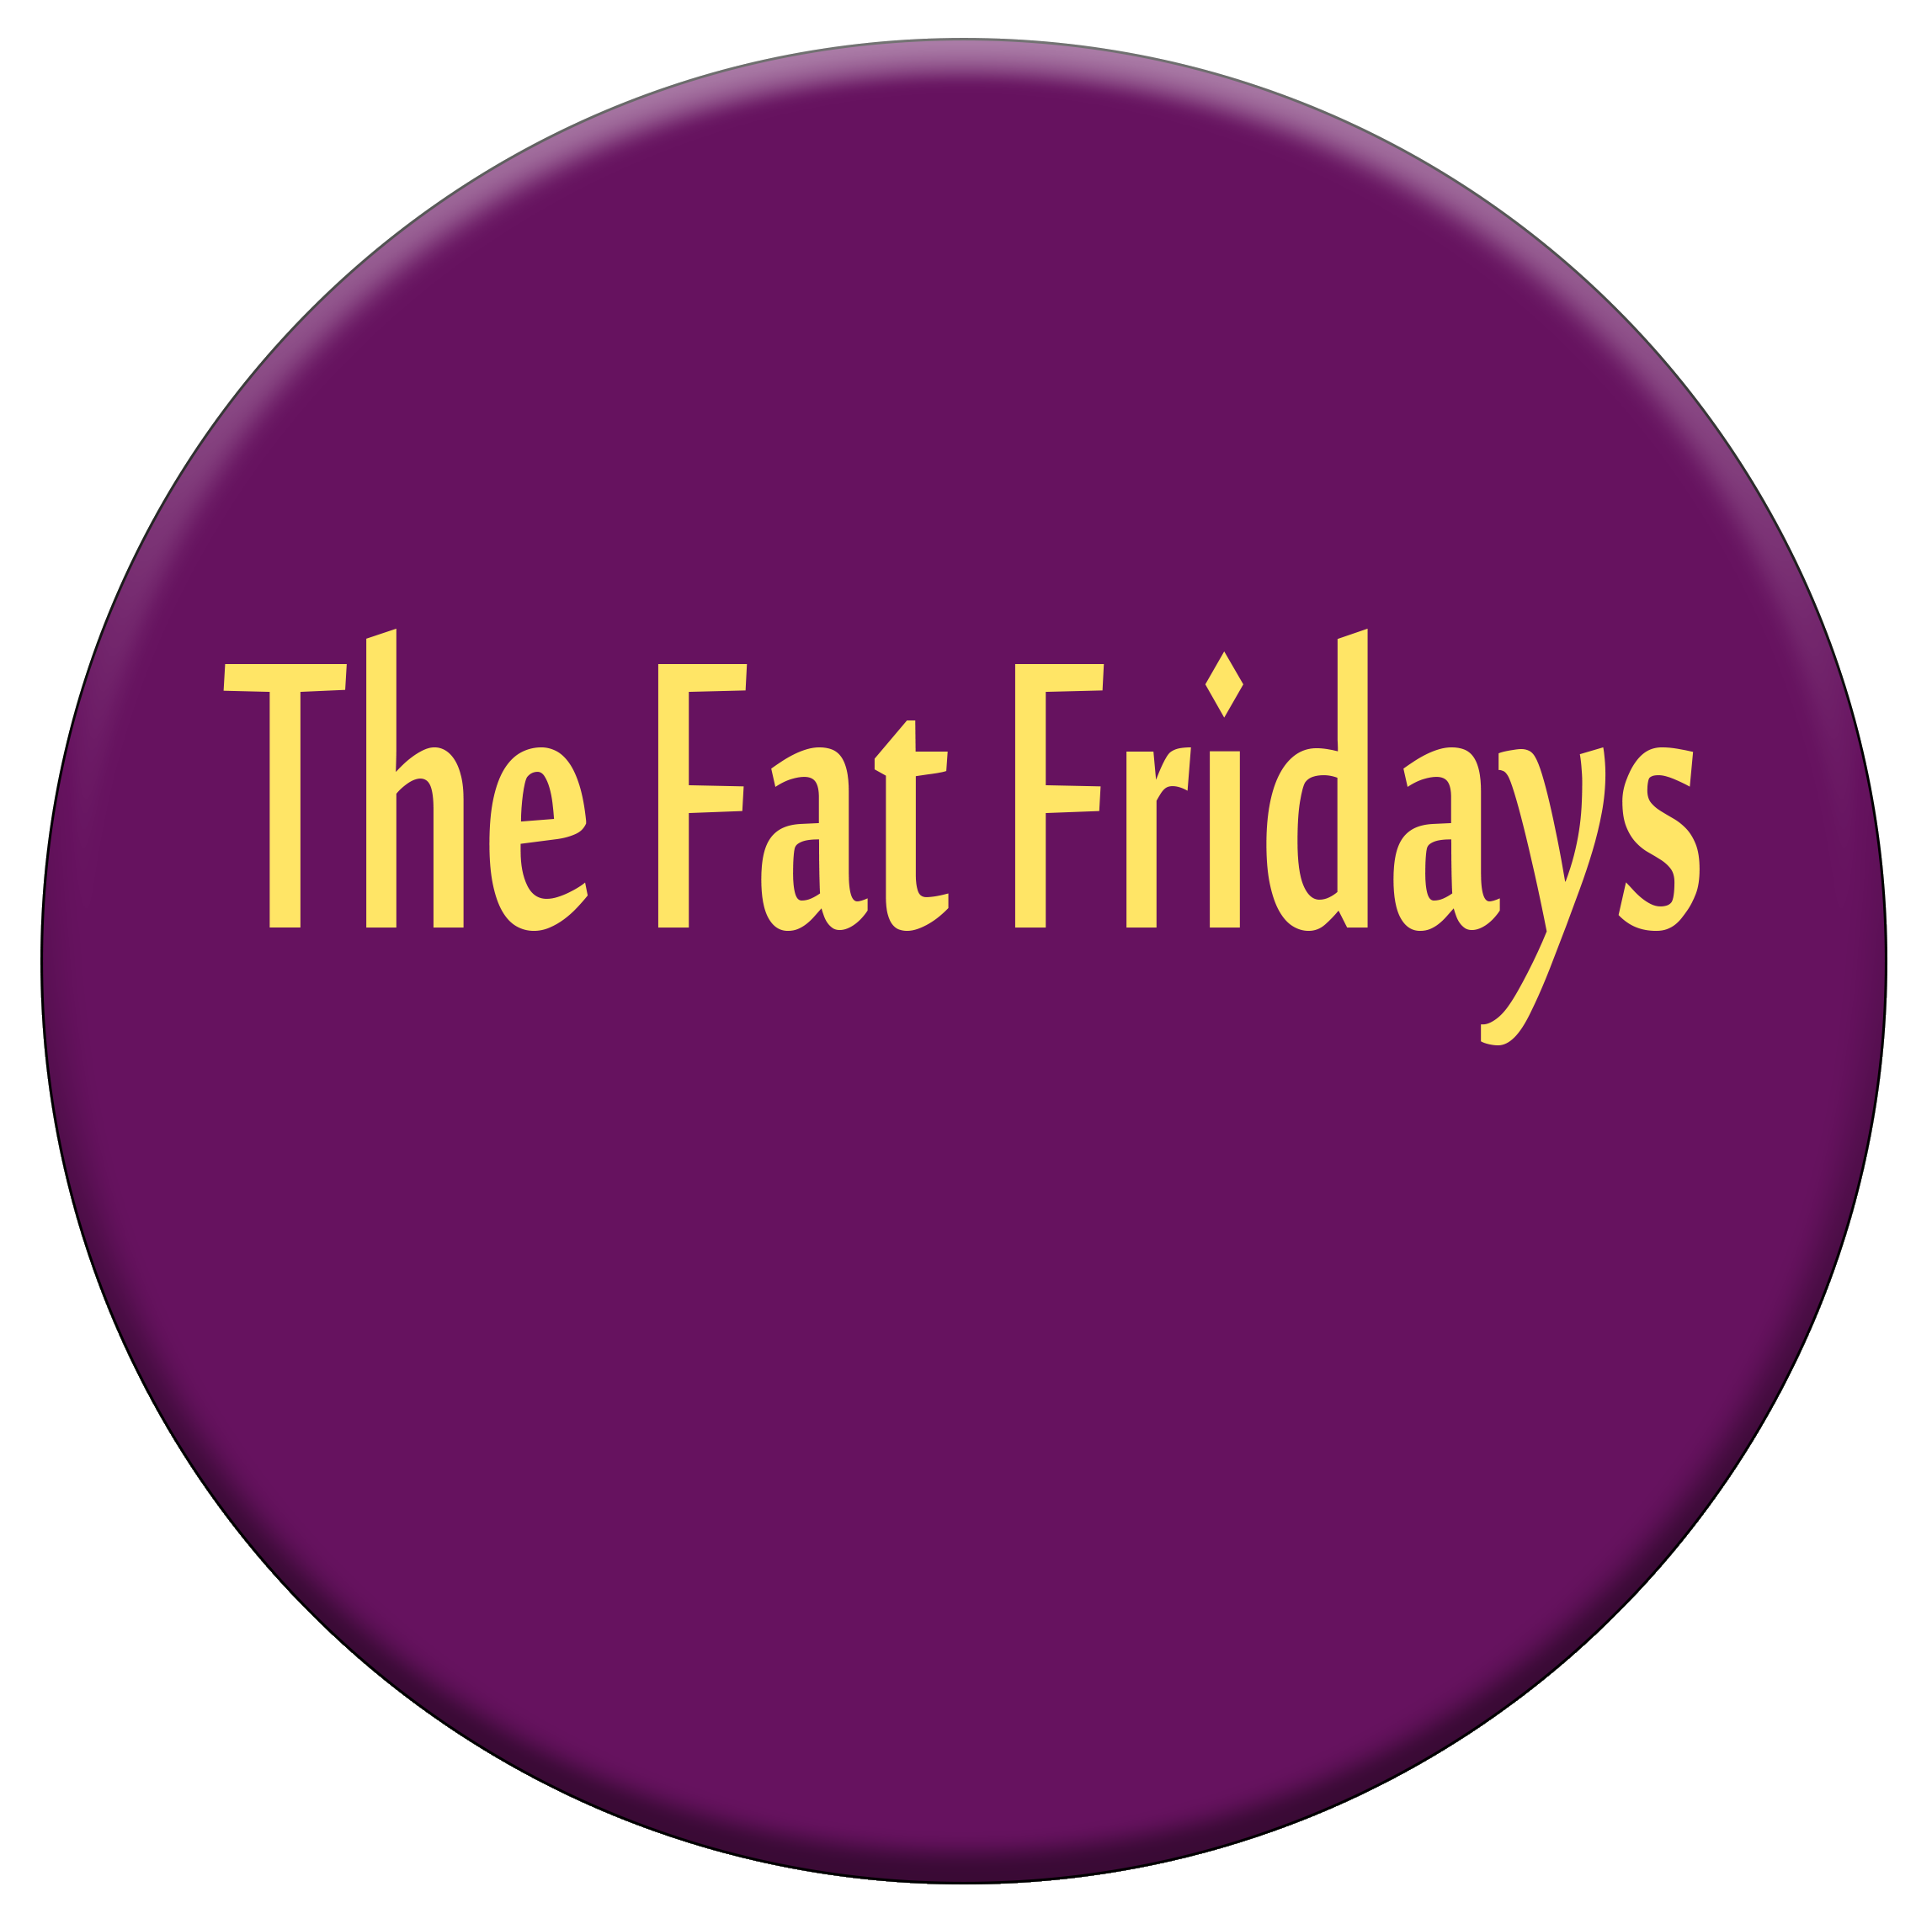 The Fat Fridays